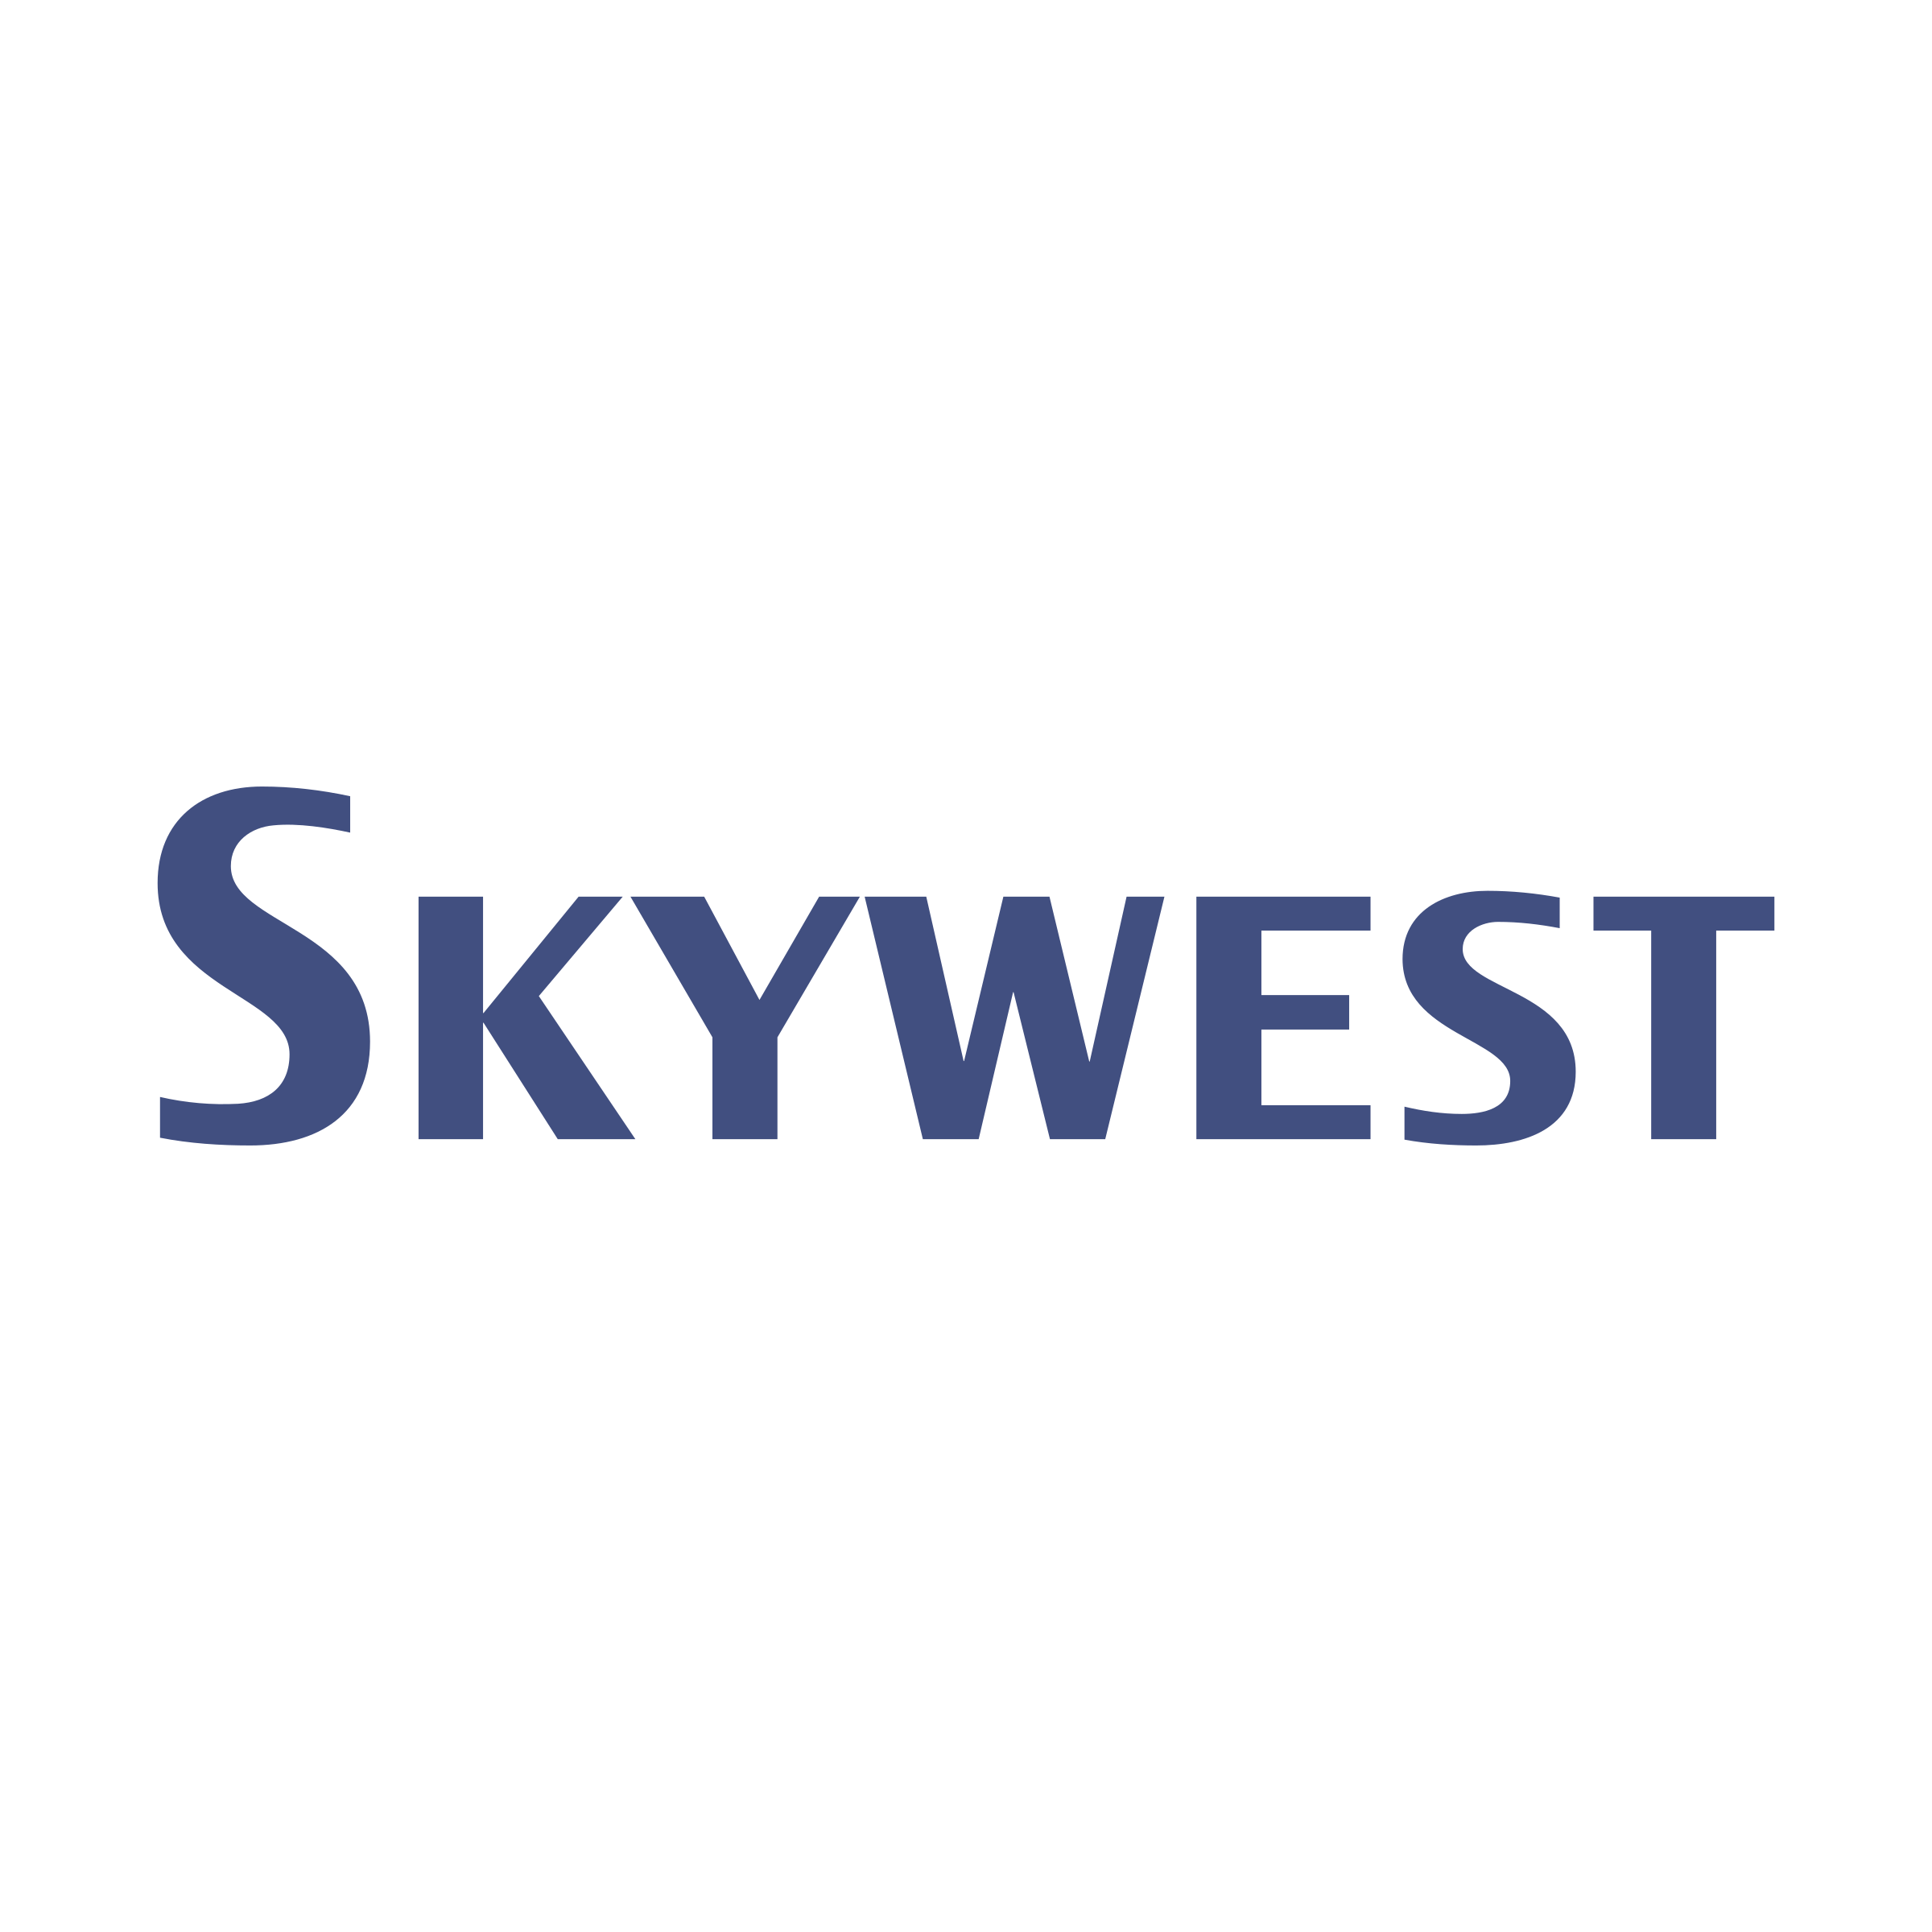 SkyWest Logo - SkyWest Airlines Logo PNG Transparent & SVG Vector - Freebie Supply